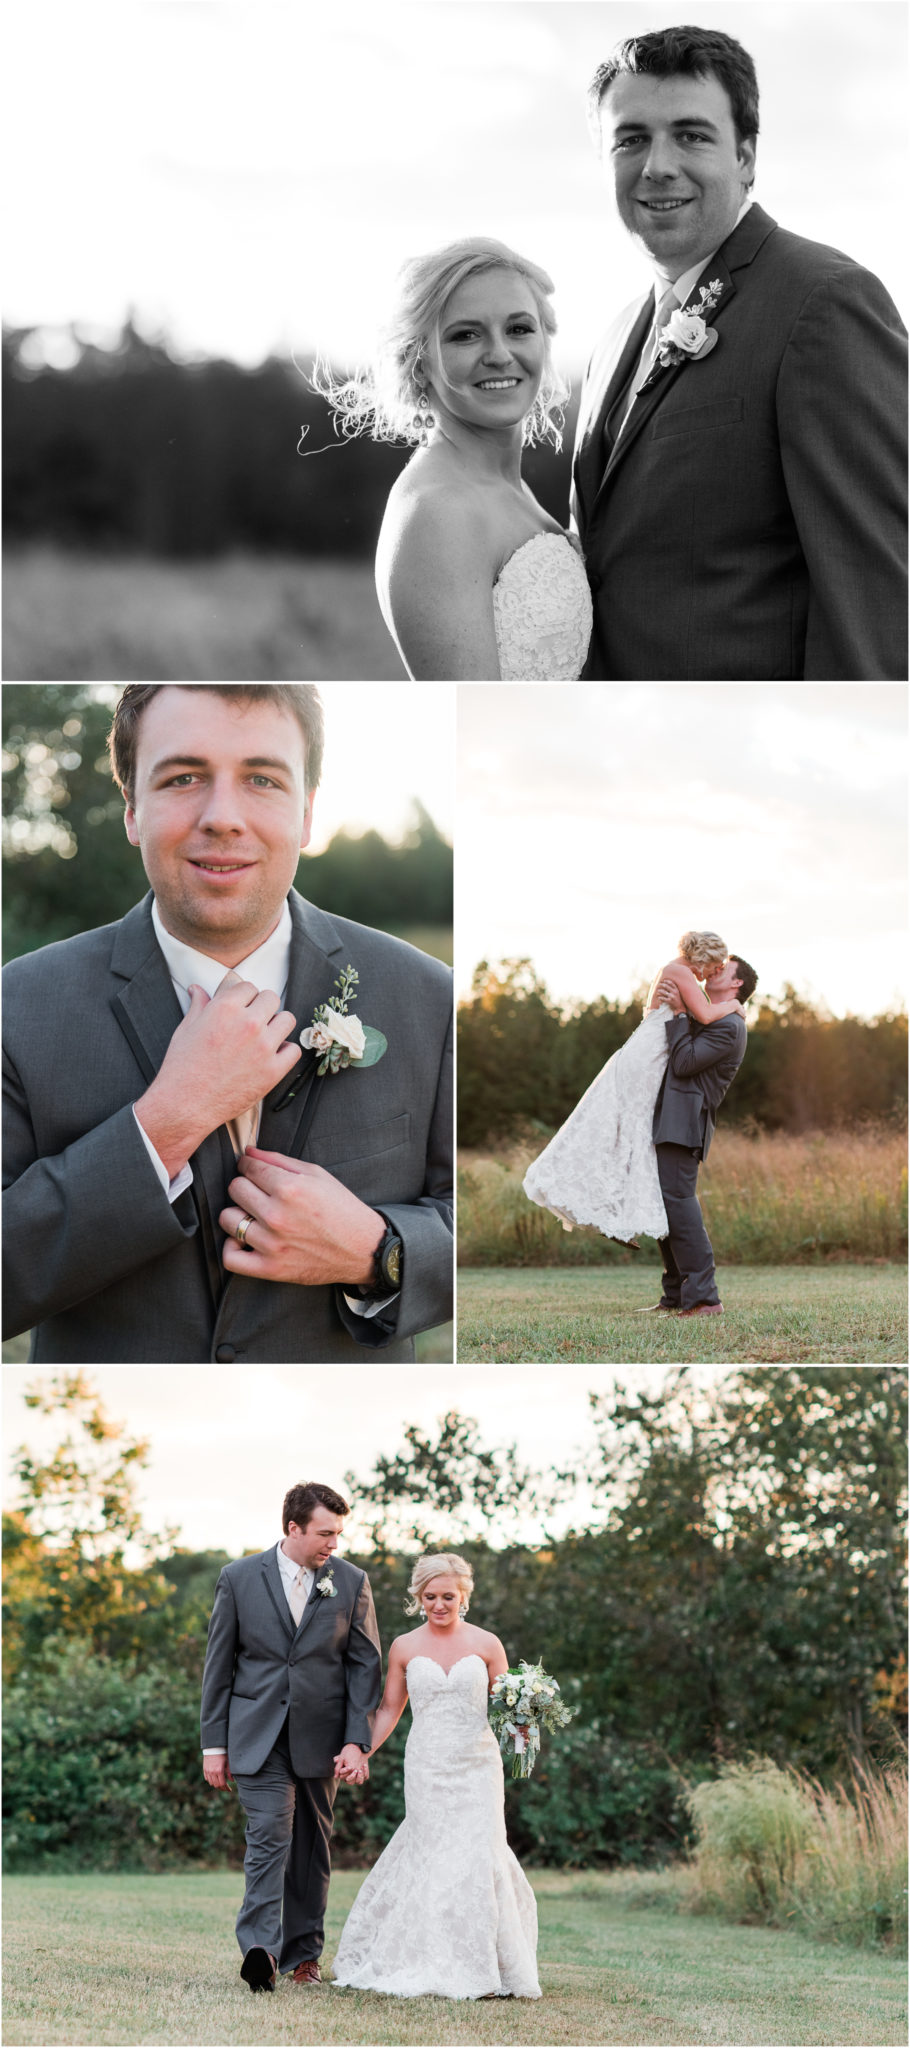 An Ellery Farms Wedding in Woodruff South Carolina bride and groom sunset photos